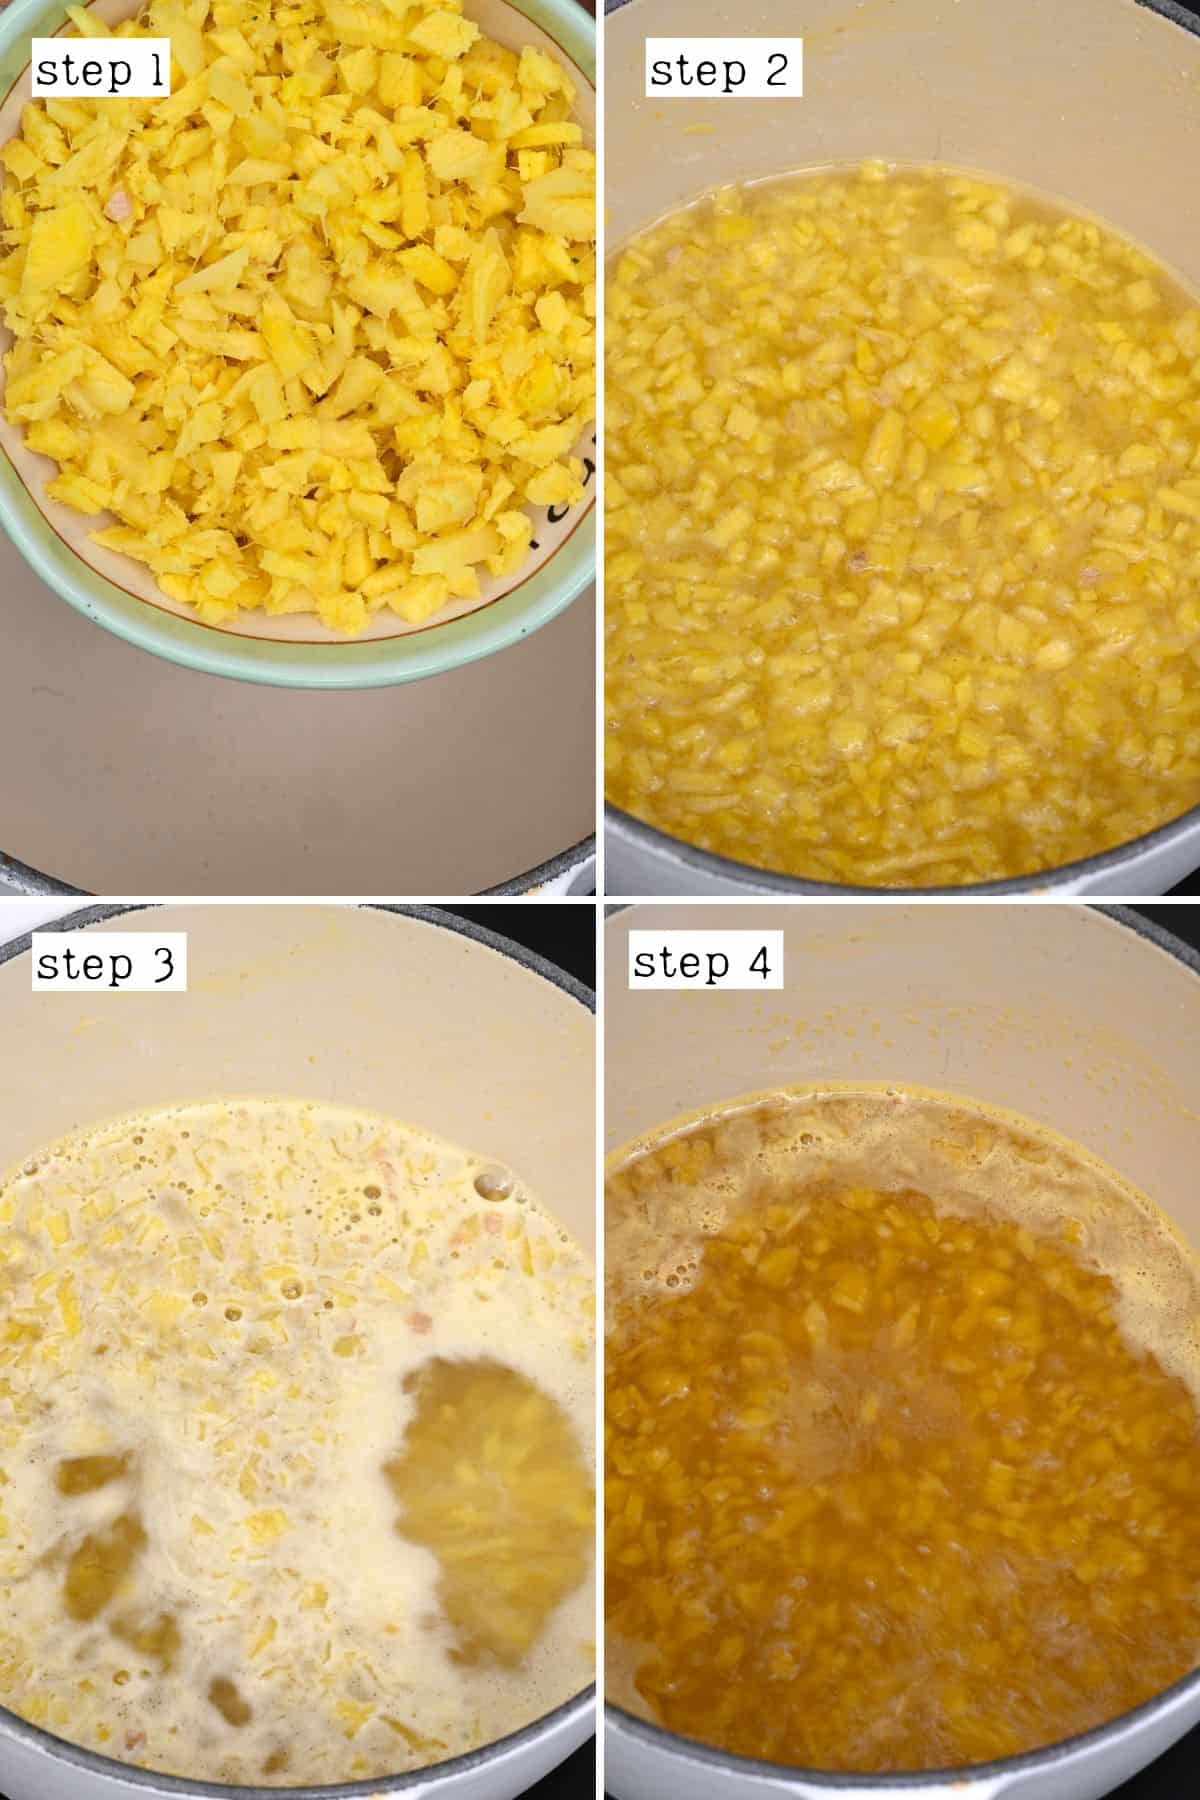 Steps for making ginger syrup